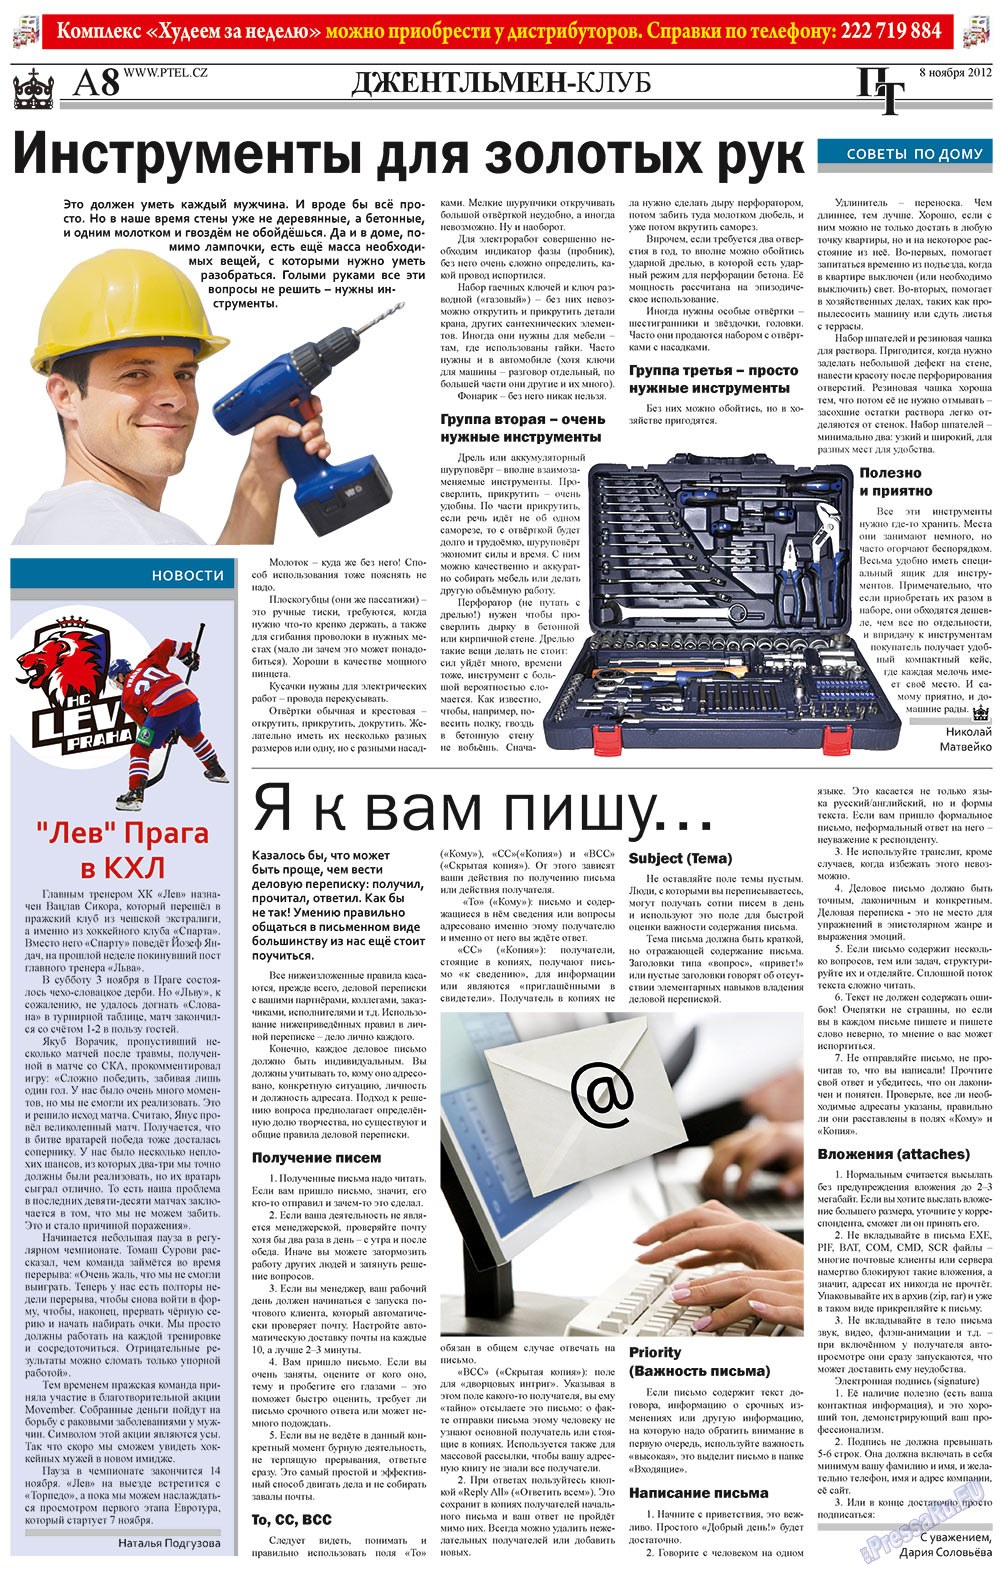 Пражский телеграф, газета. 2012 №44 стр.8